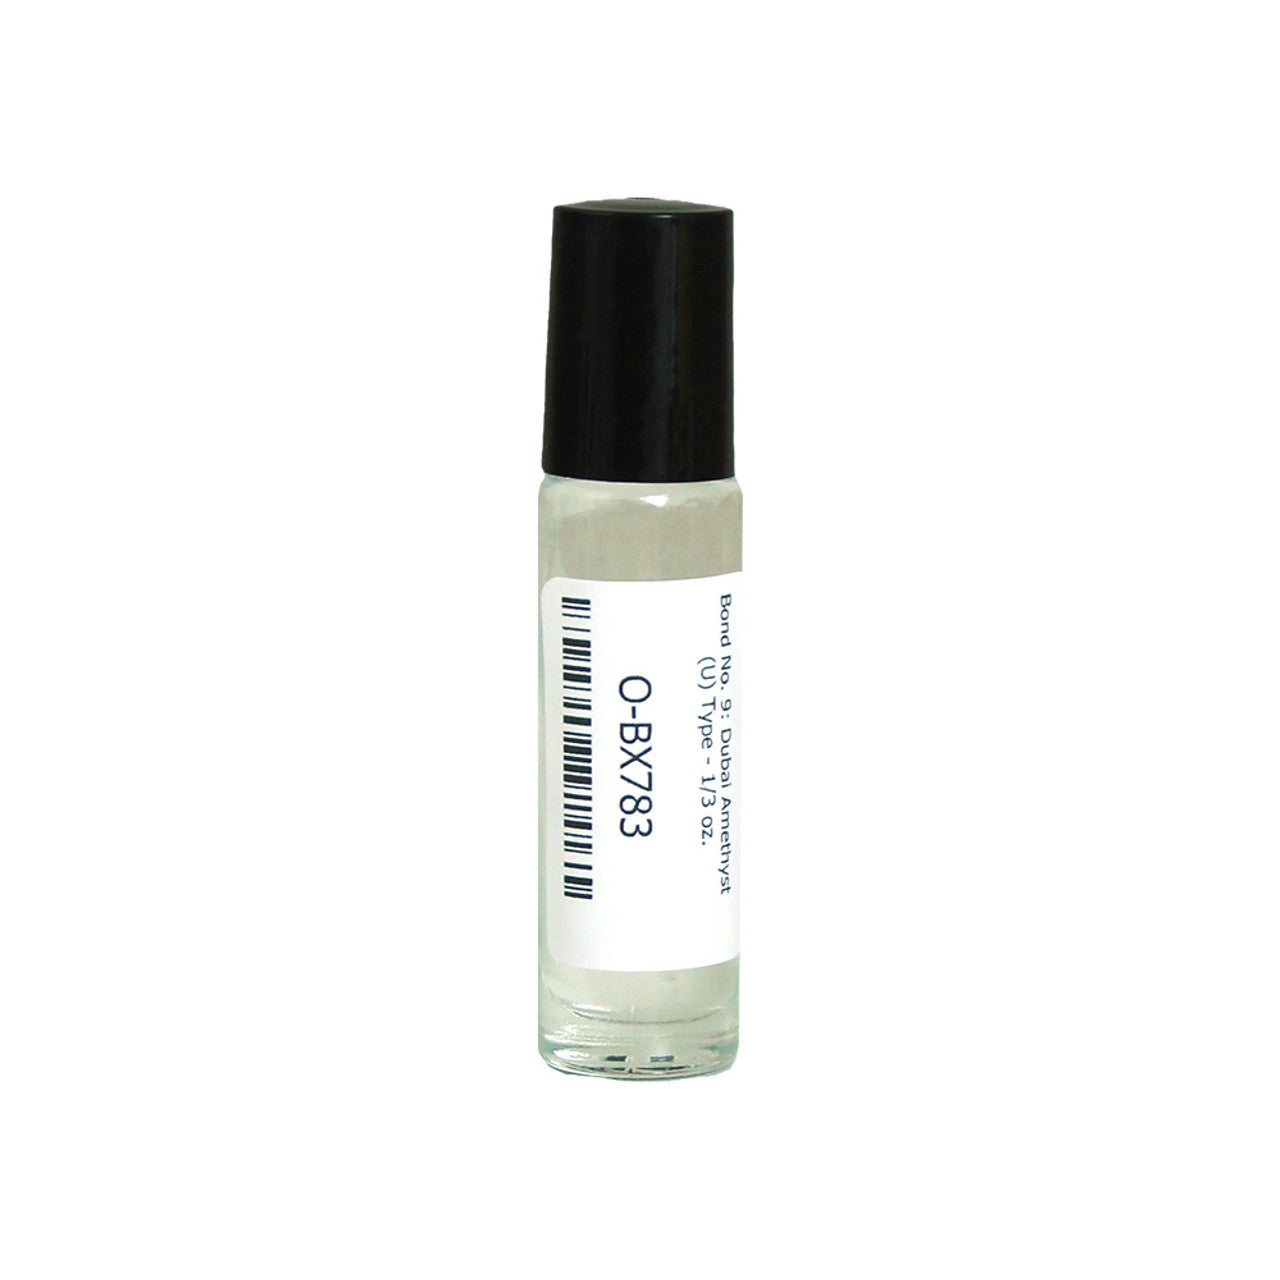 Bond No. 9: Dubai Amethyst Fragrance Oil